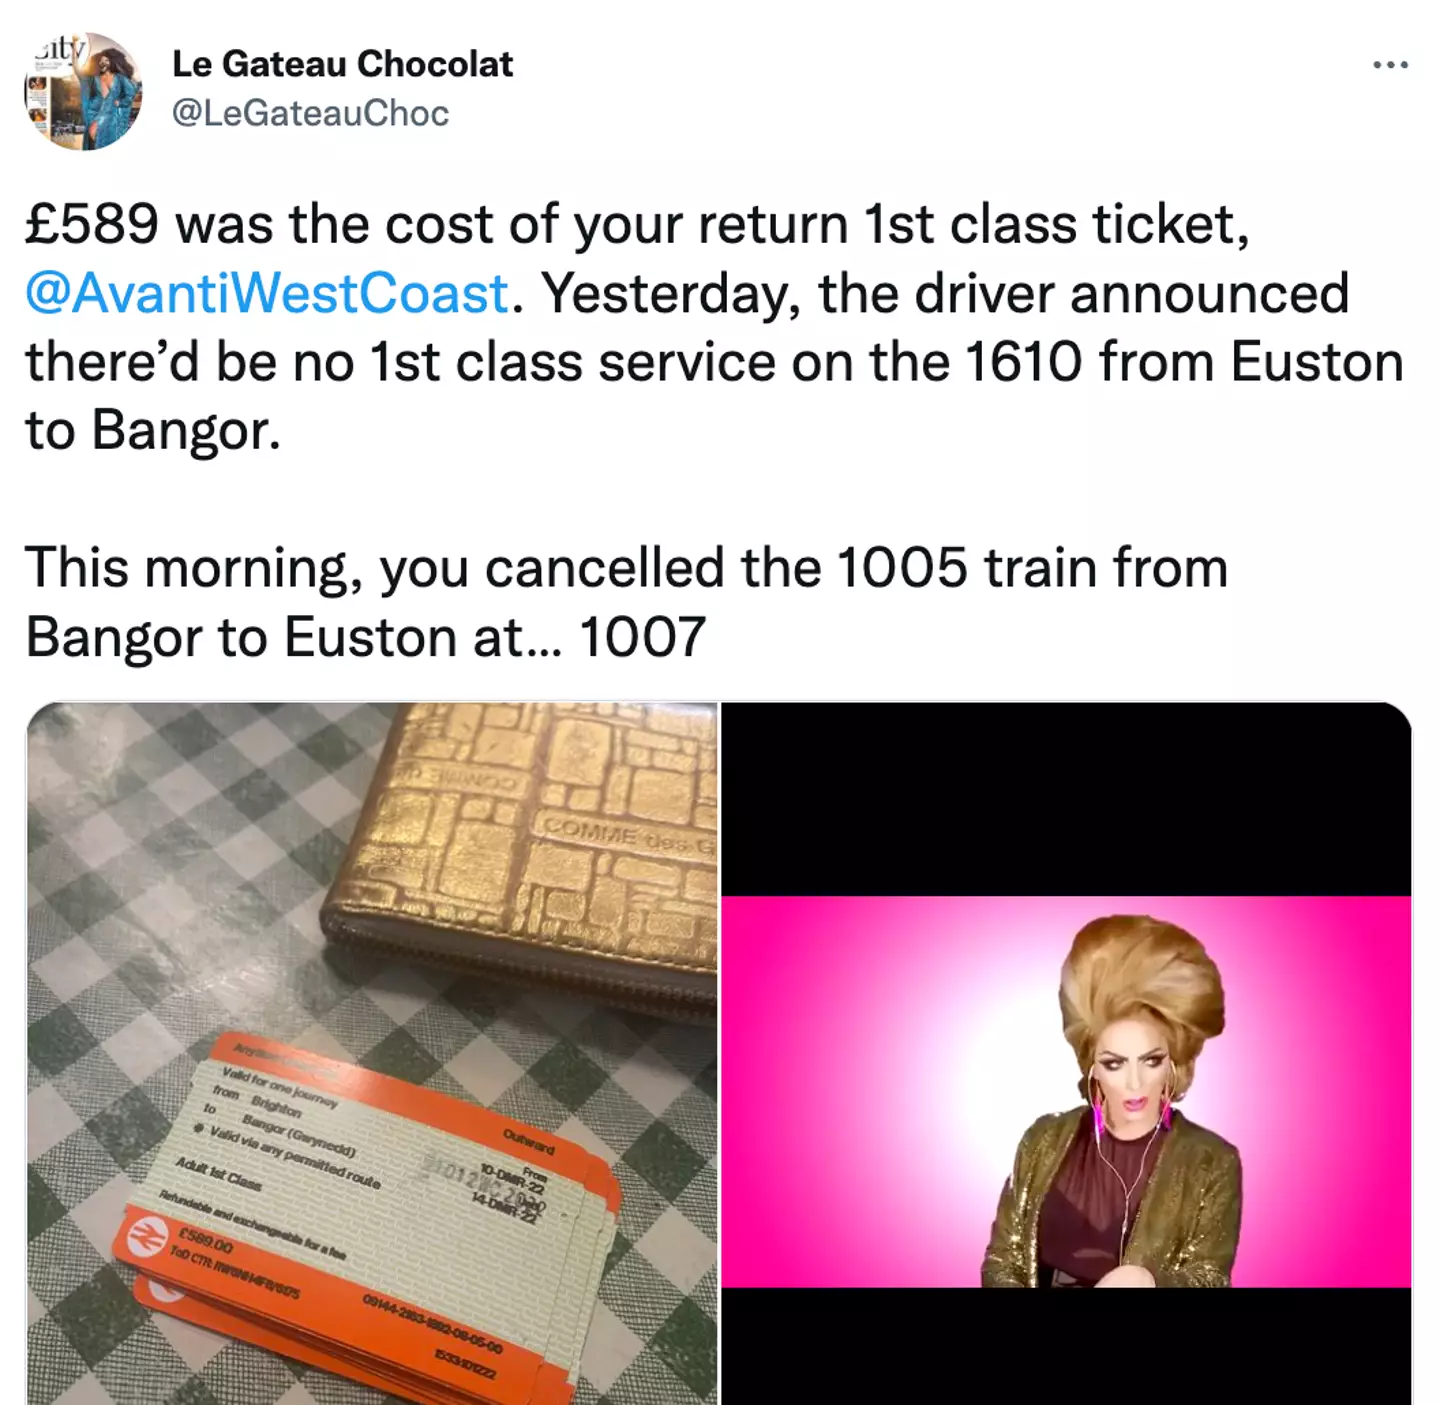 Chocolat criticised Avanti for the train cancellations.